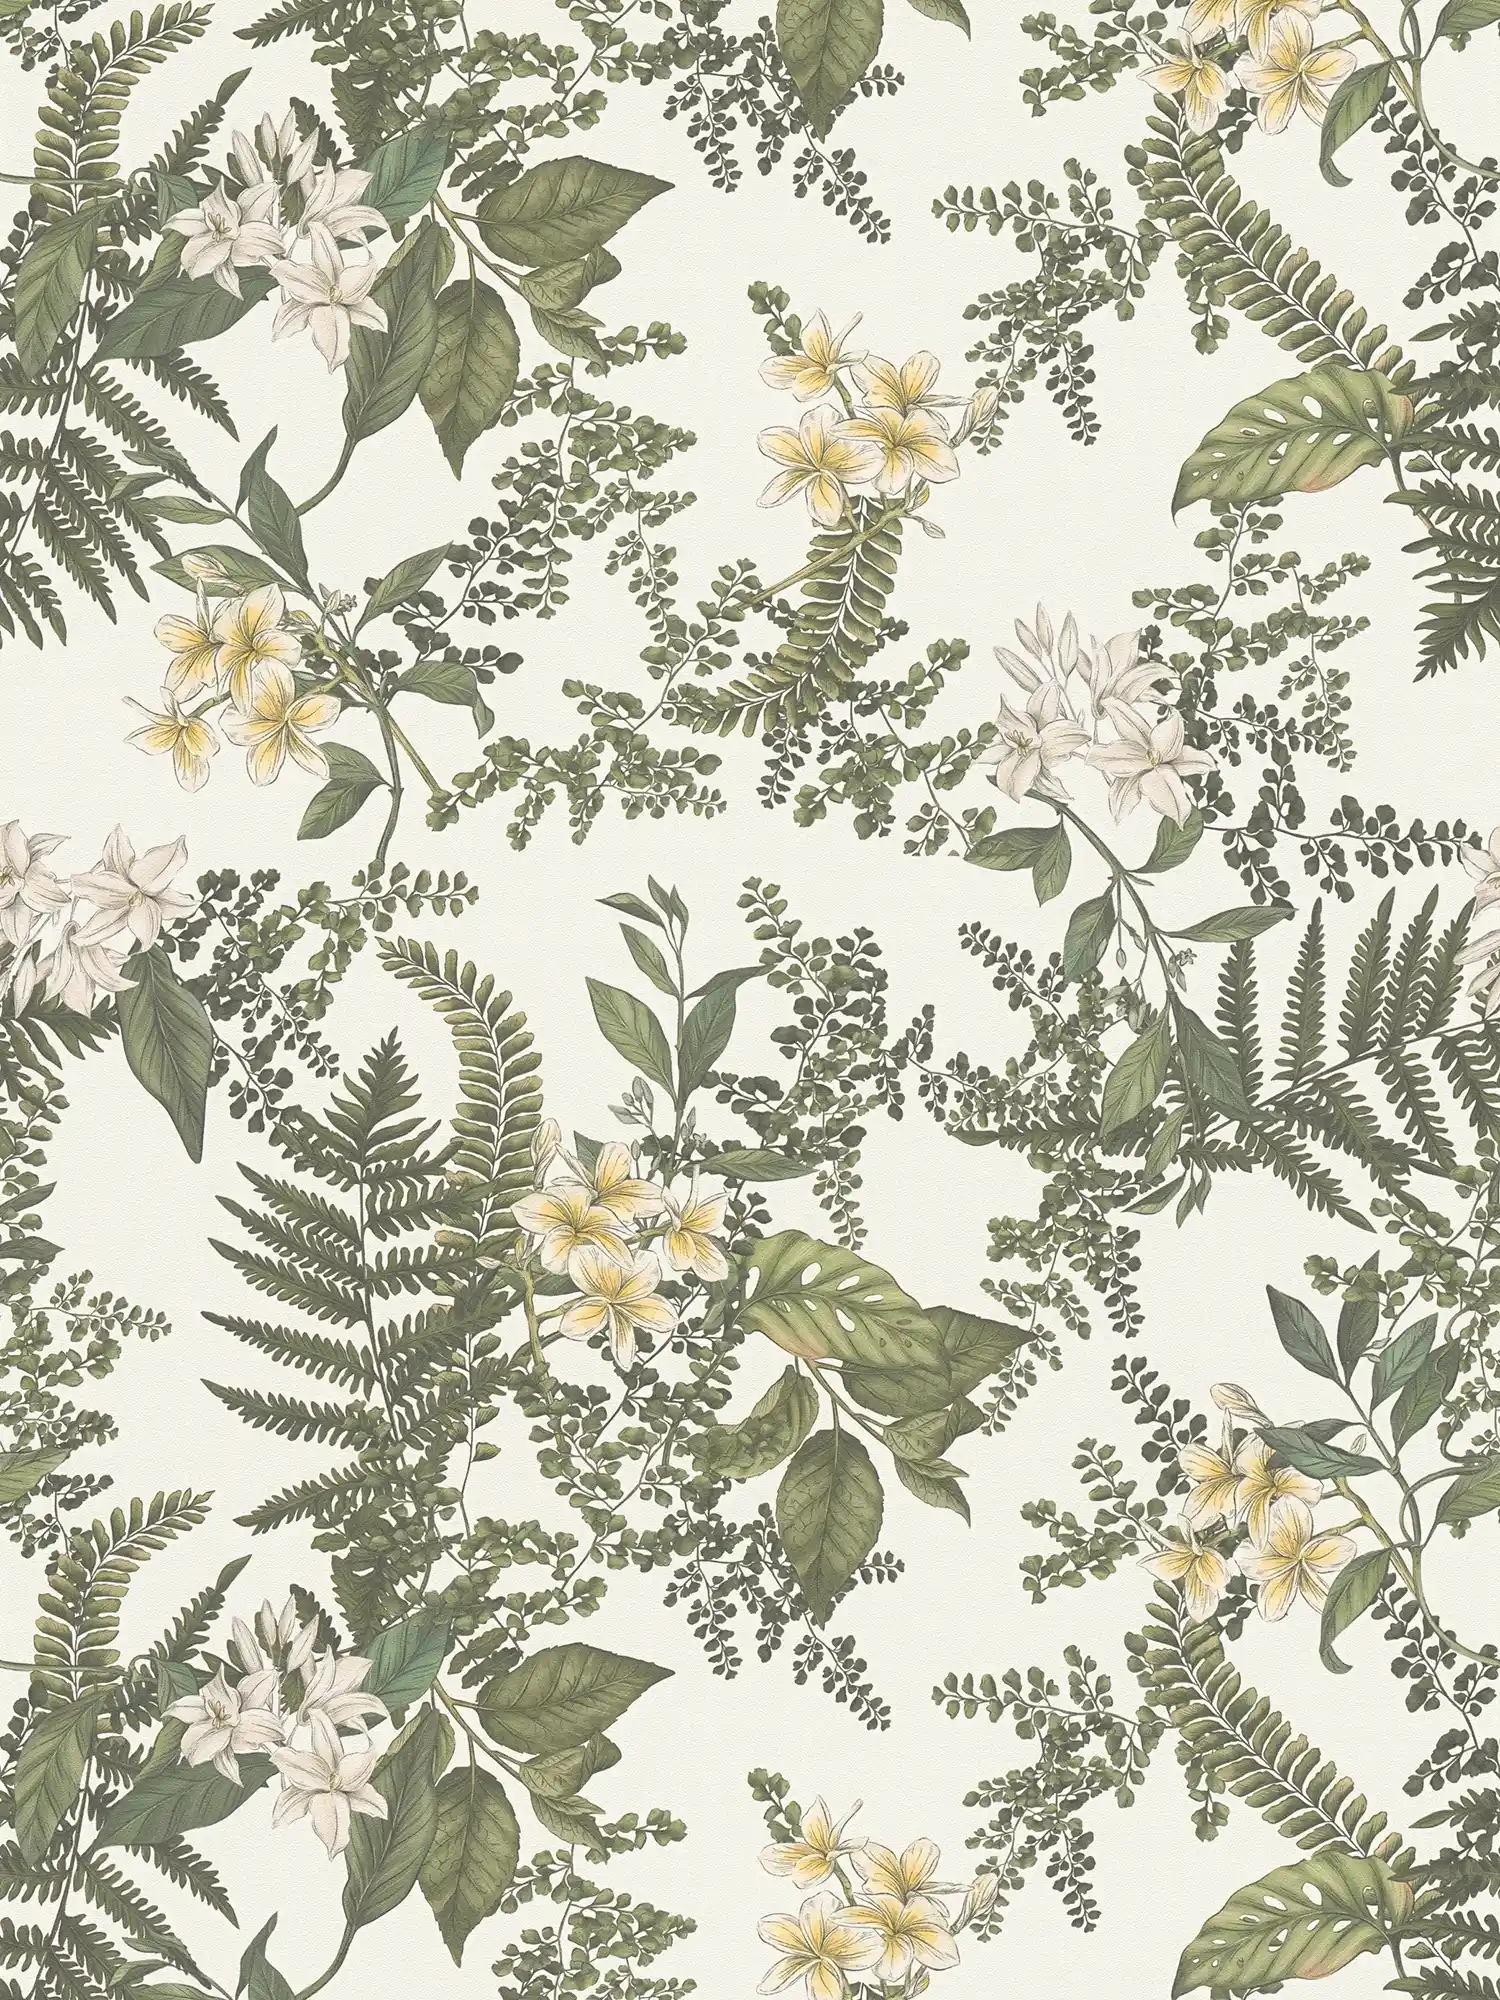 Floral wallpaper modern with flowers & grasses textured matt - white, dark green, yellow
